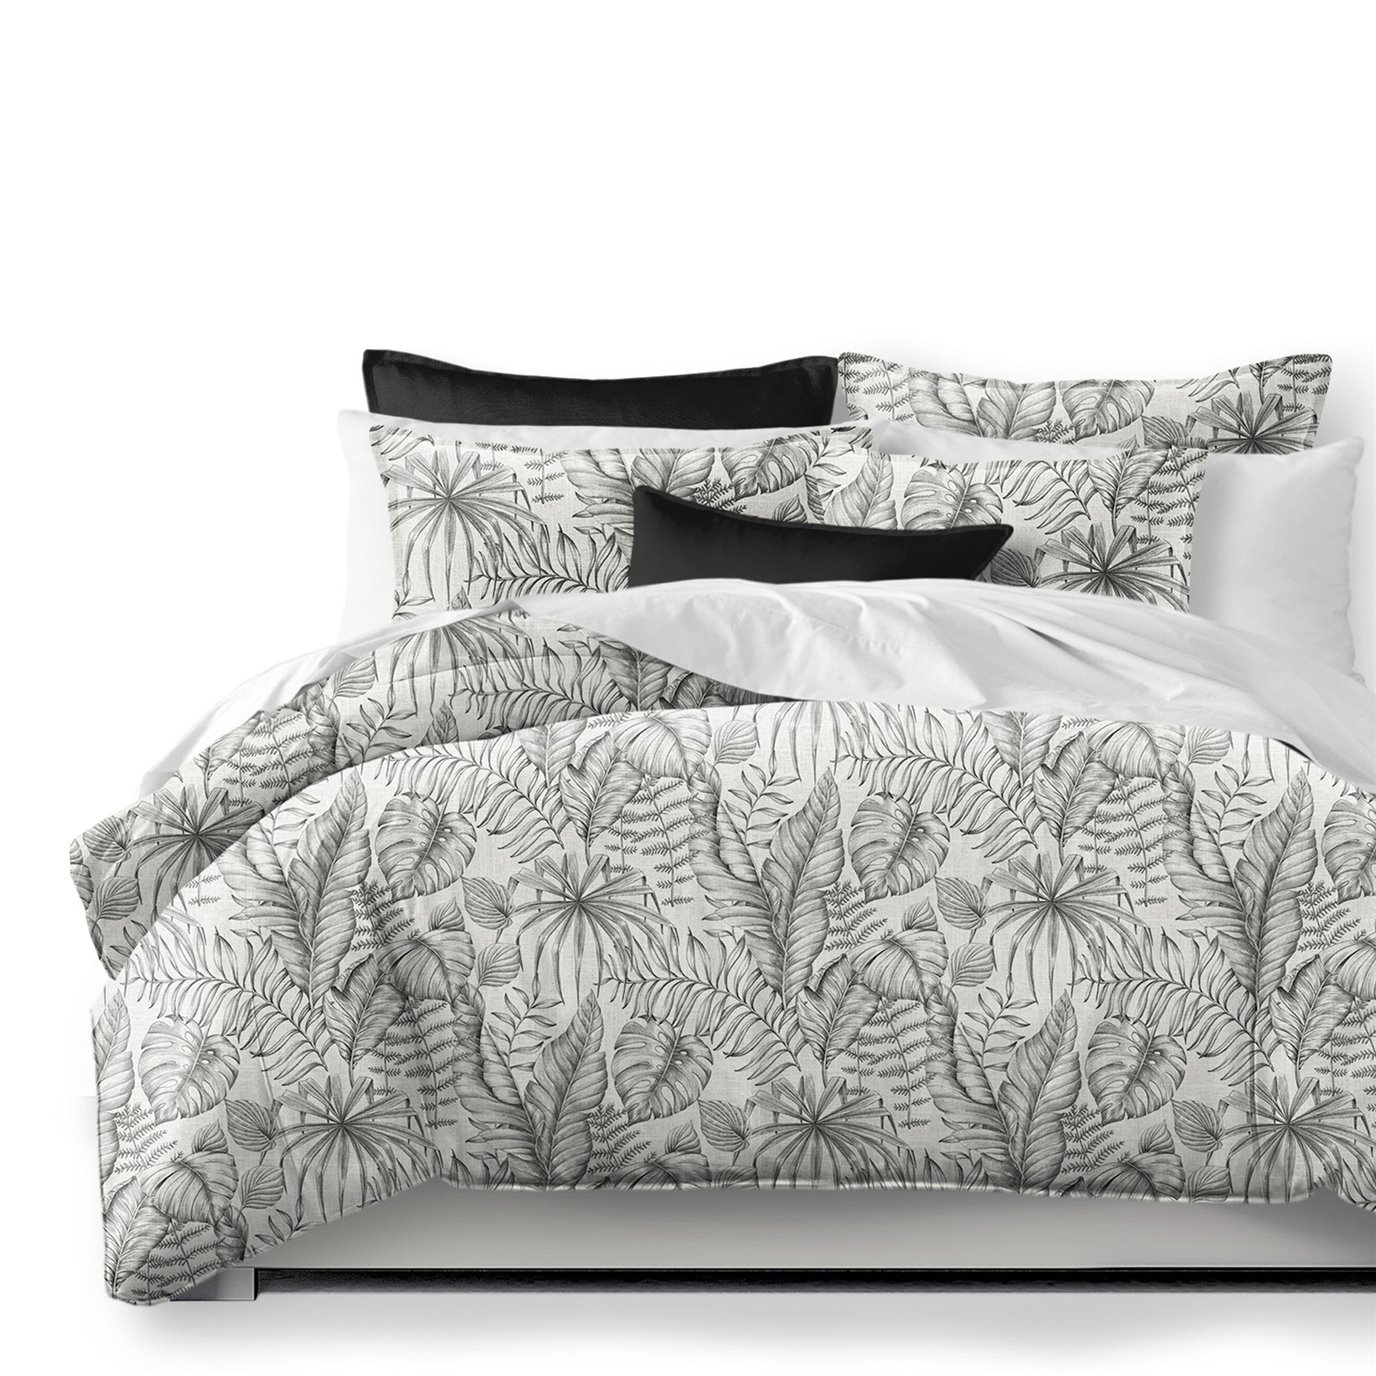 Liraz Black Coal Comforter and Pillow Sham(s) Set - Size Twin